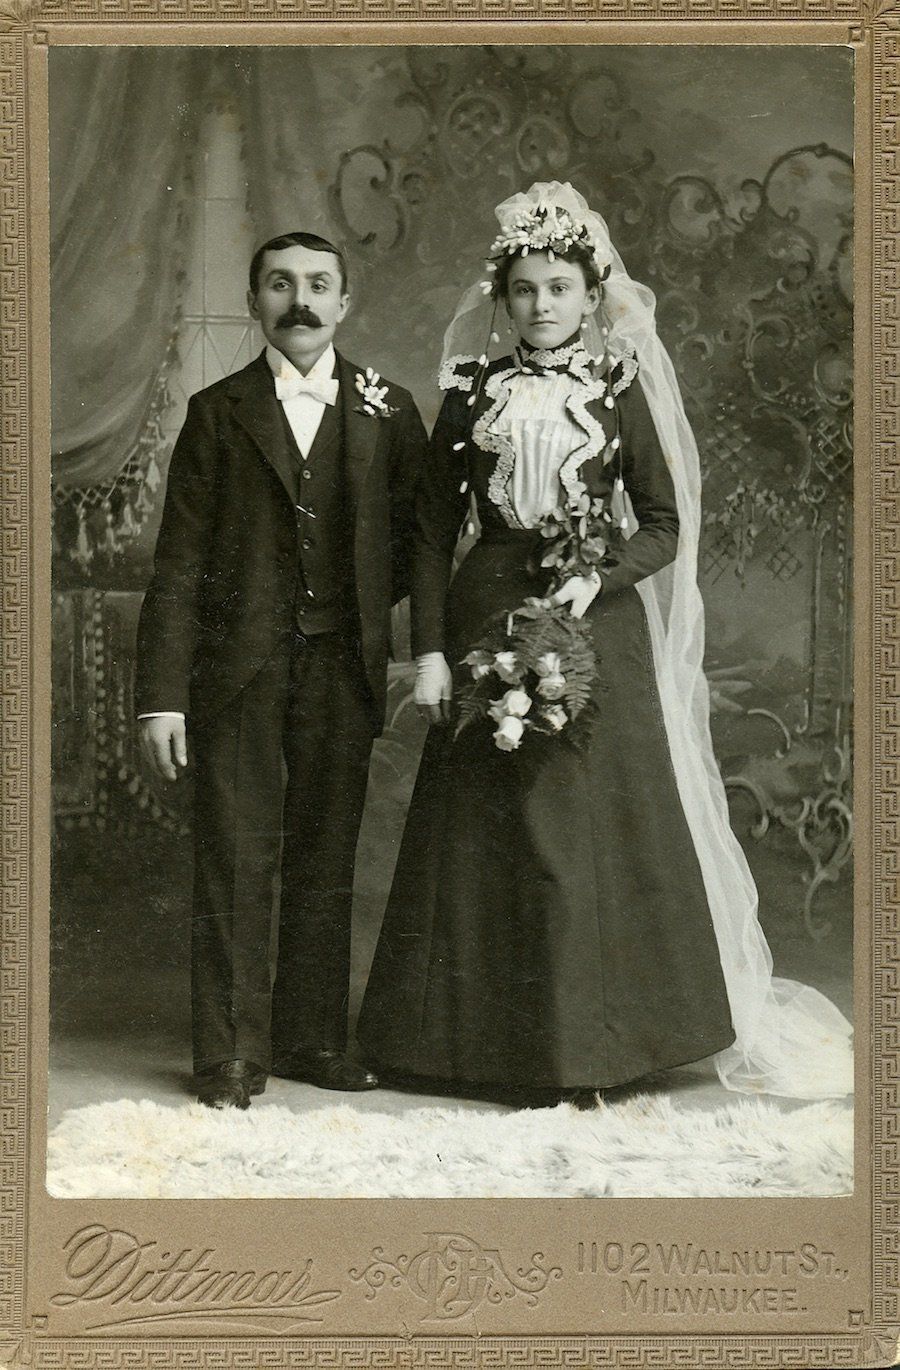 Early Wedding Photos Had No Touching No Smiles No 